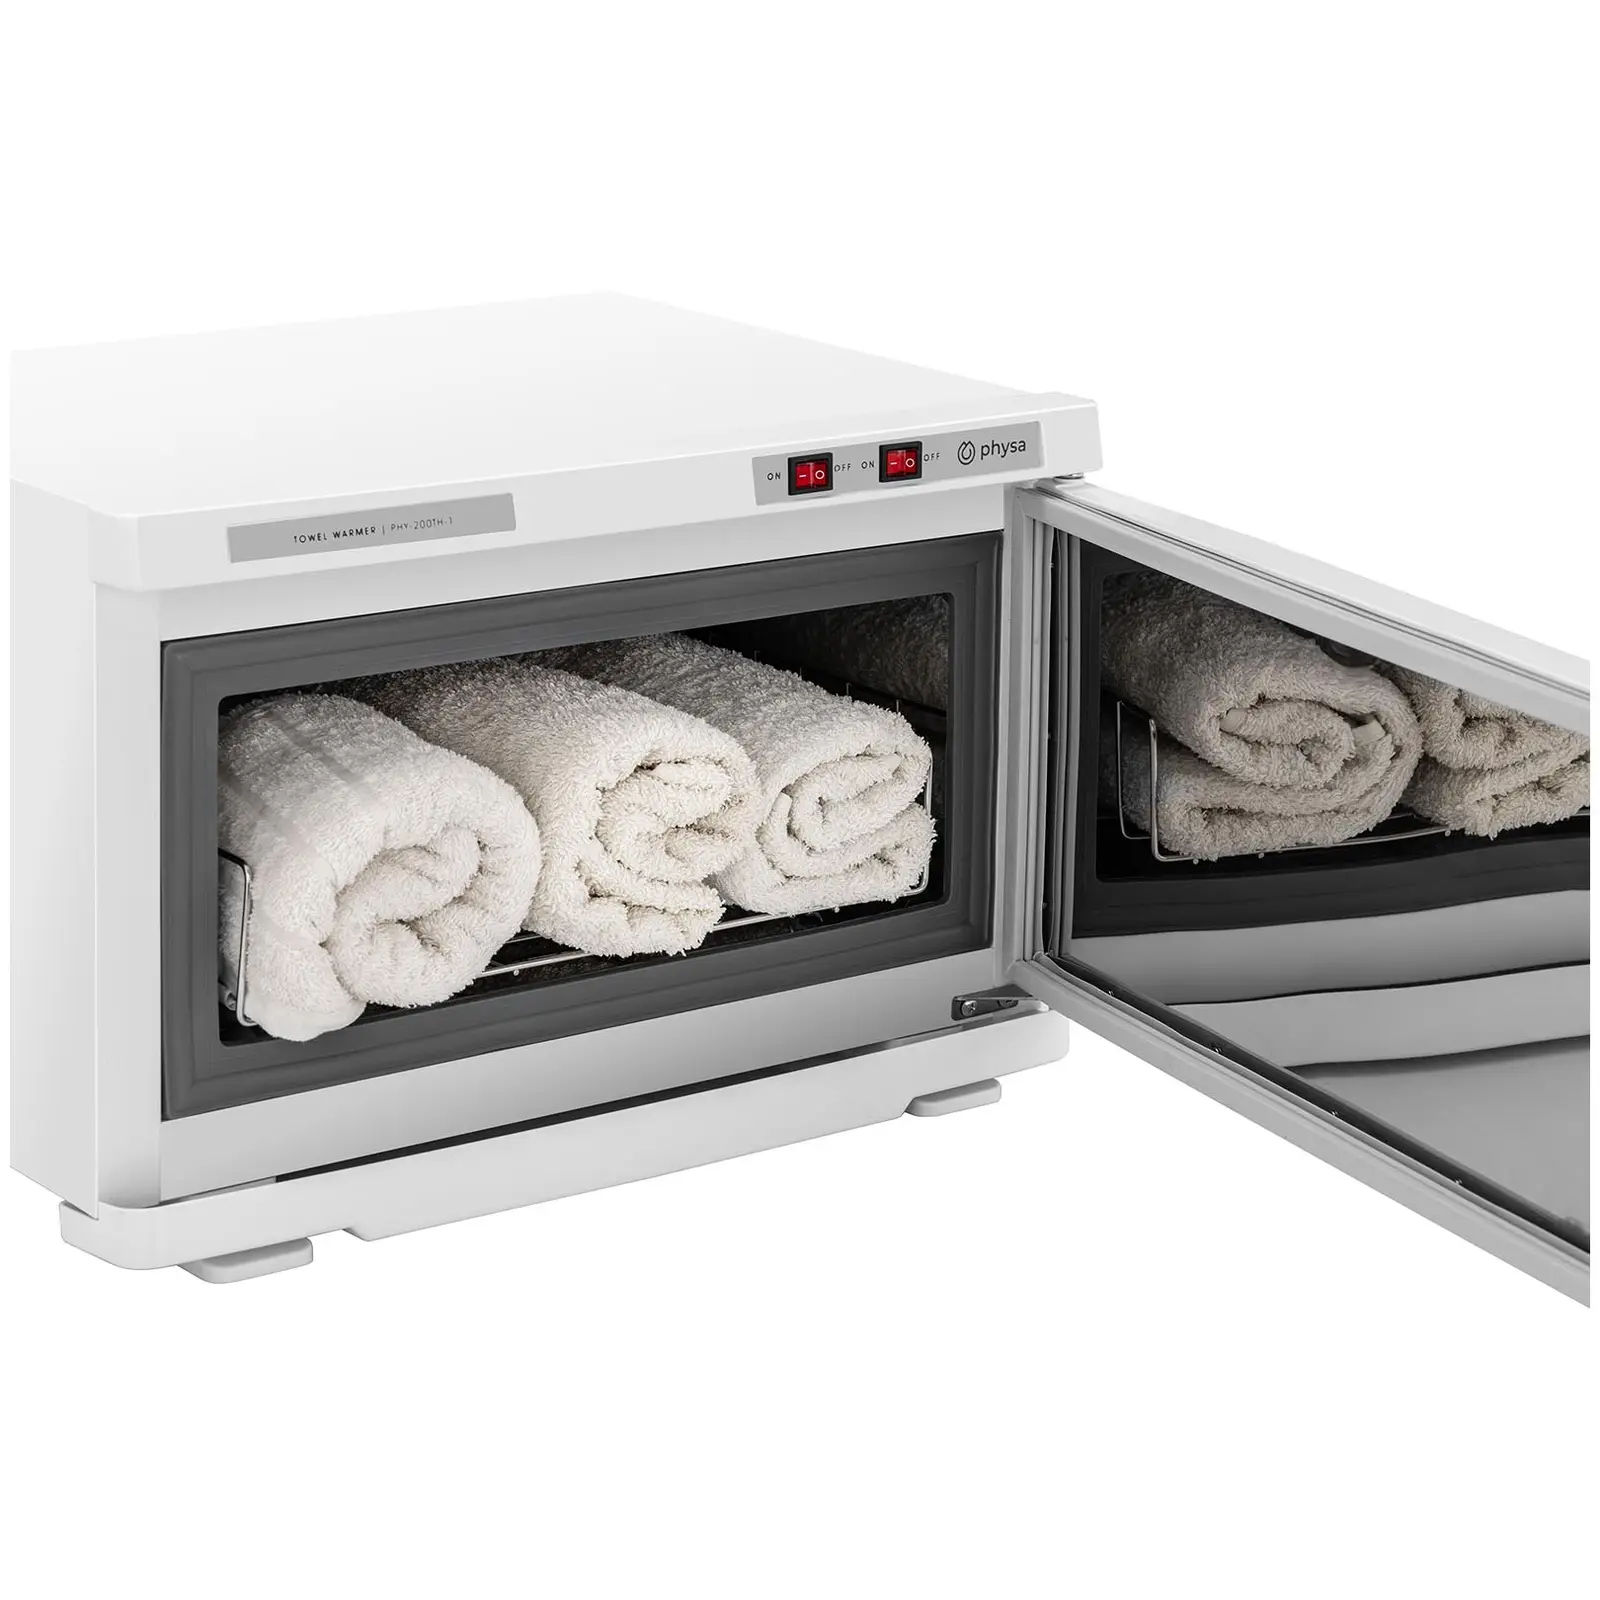 Ocasión Horno calentador de toallas - con esterilización UV - 70 °C - 230 W - 16 L